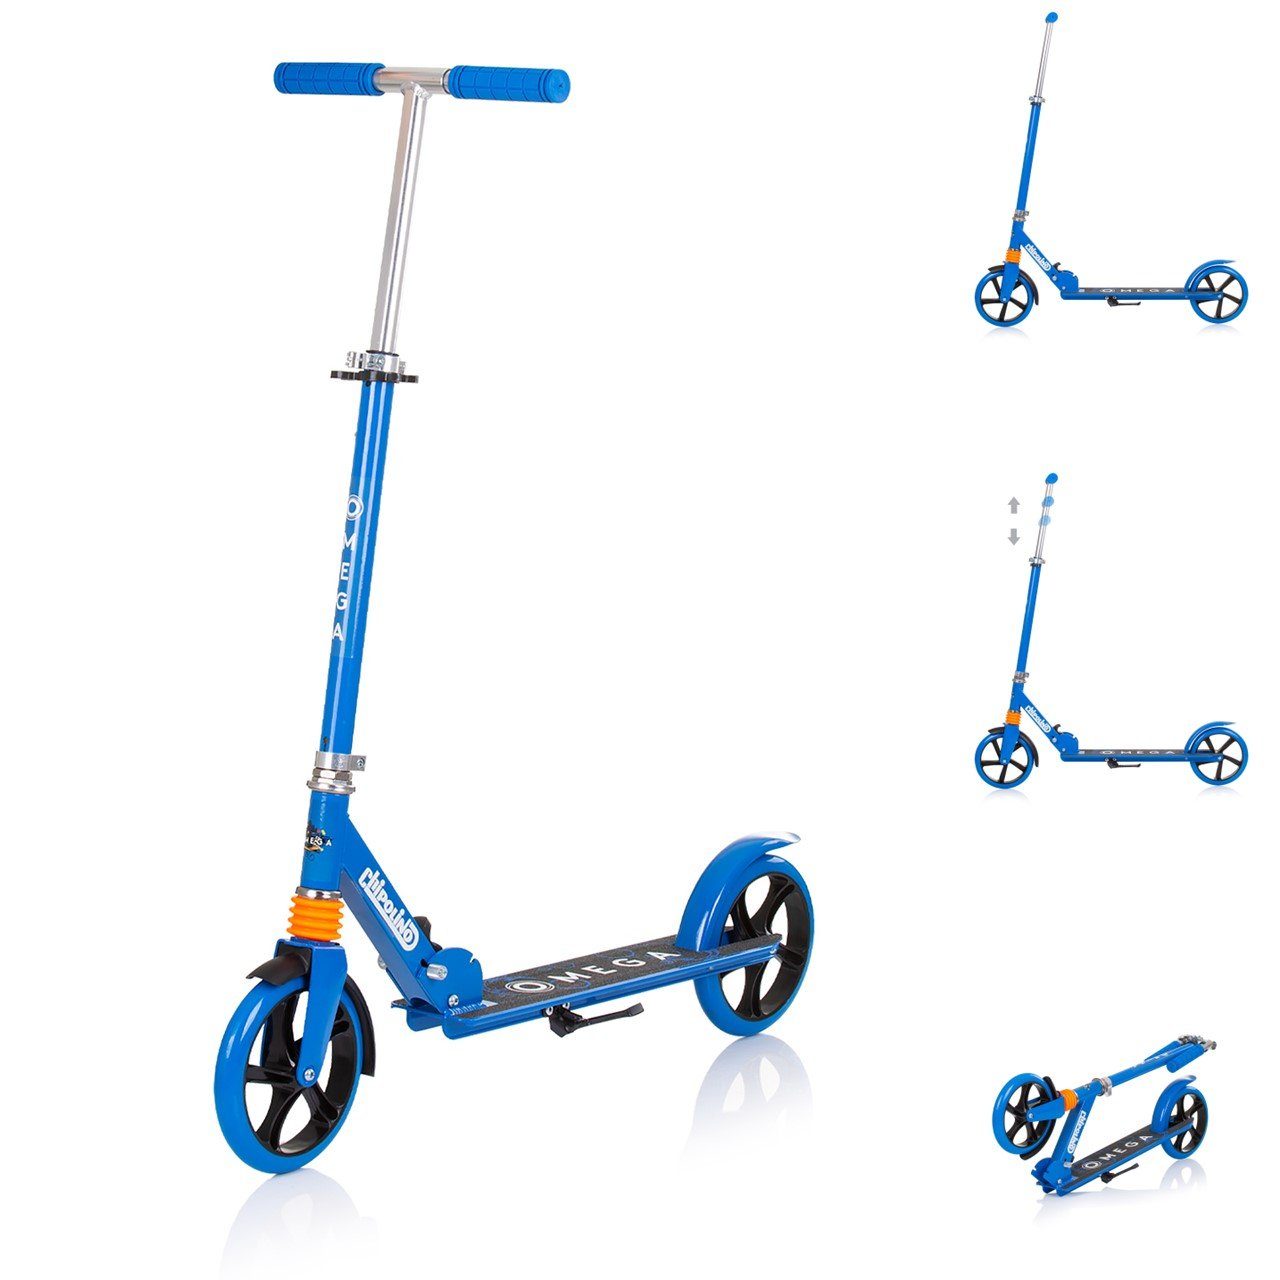 Chipolino Cityroller Kinderroller Omega PU Räder, ABEC-7 Lager verstellbar faltbar Bremse blau